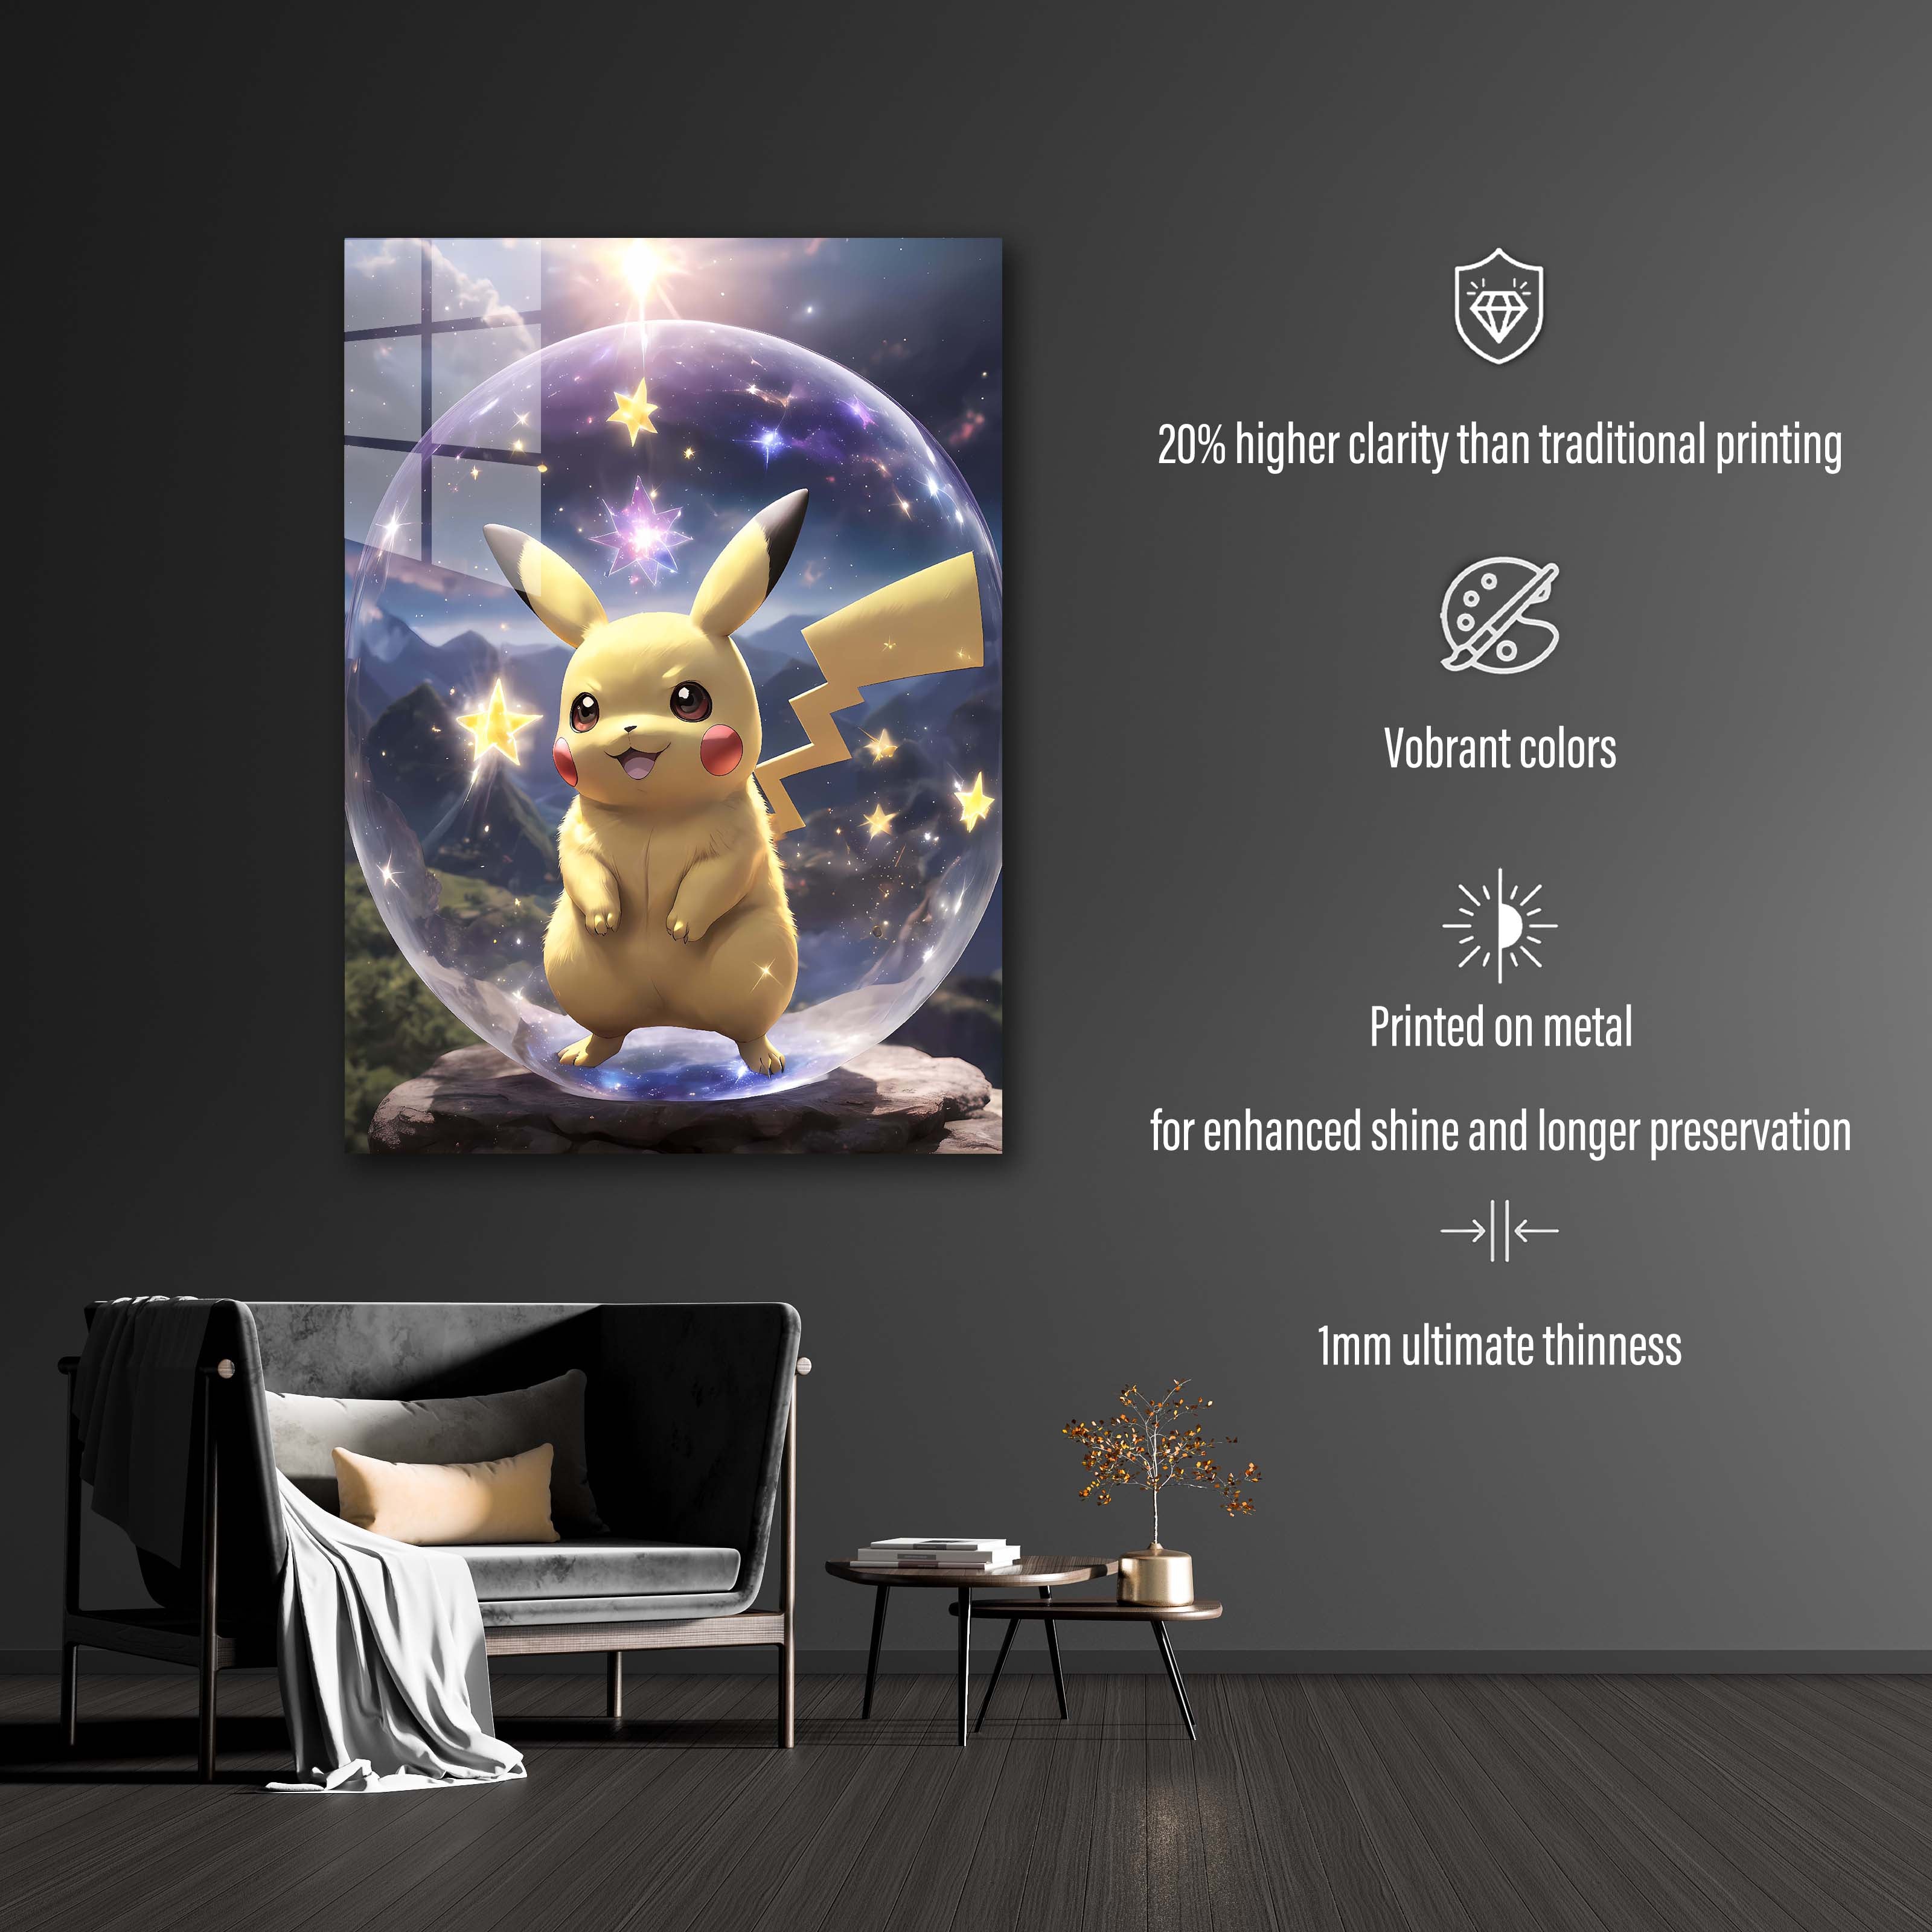 Pikachu1-designed by @Serafin Eastwood